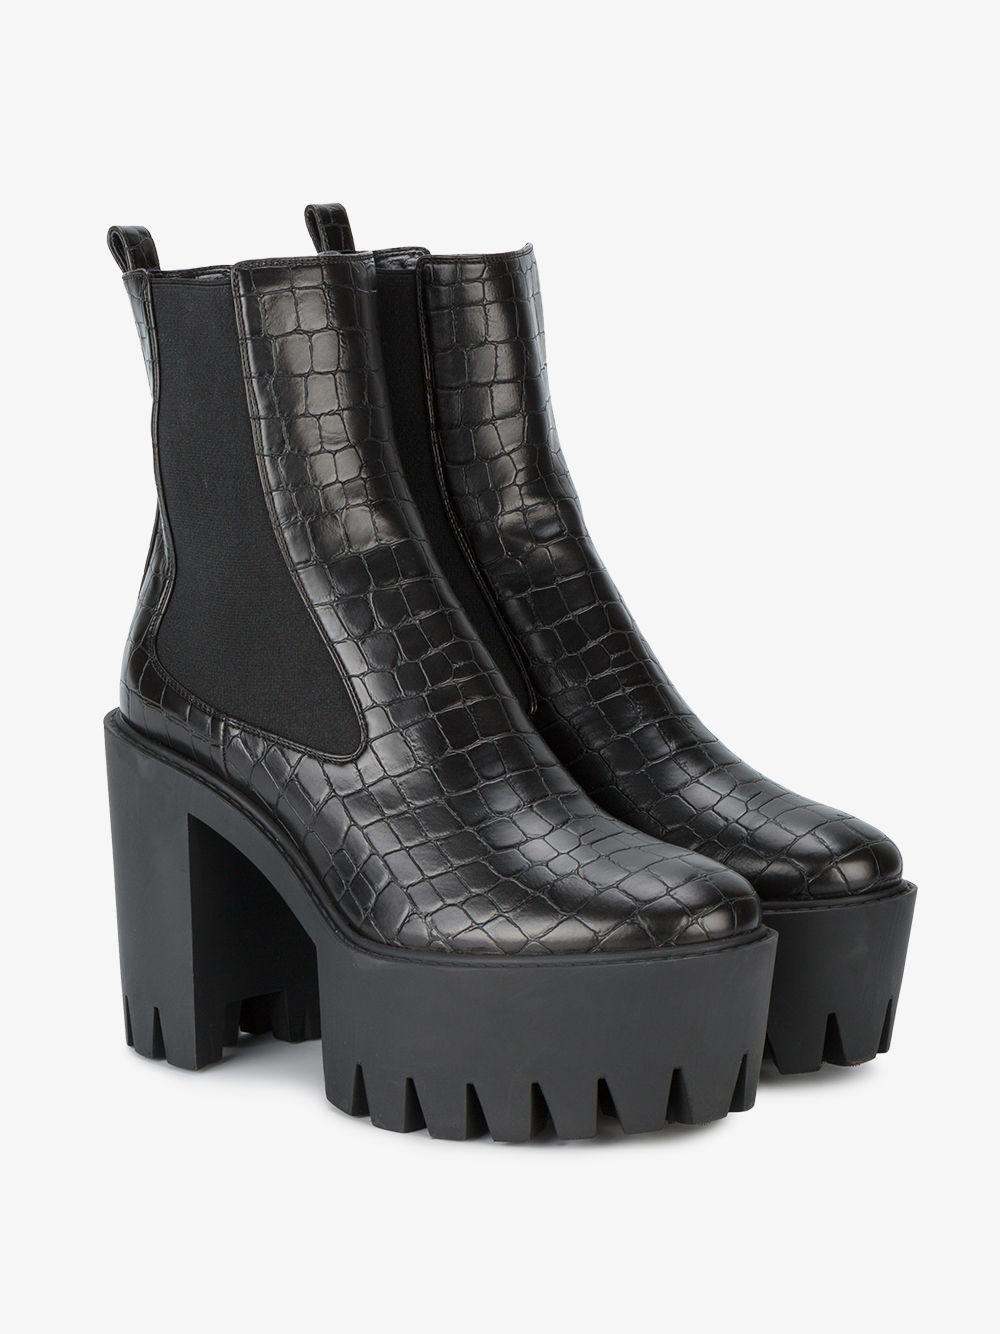 Stella McCartney Black Monster 120 Platform Ankle boots | Browns Fashion